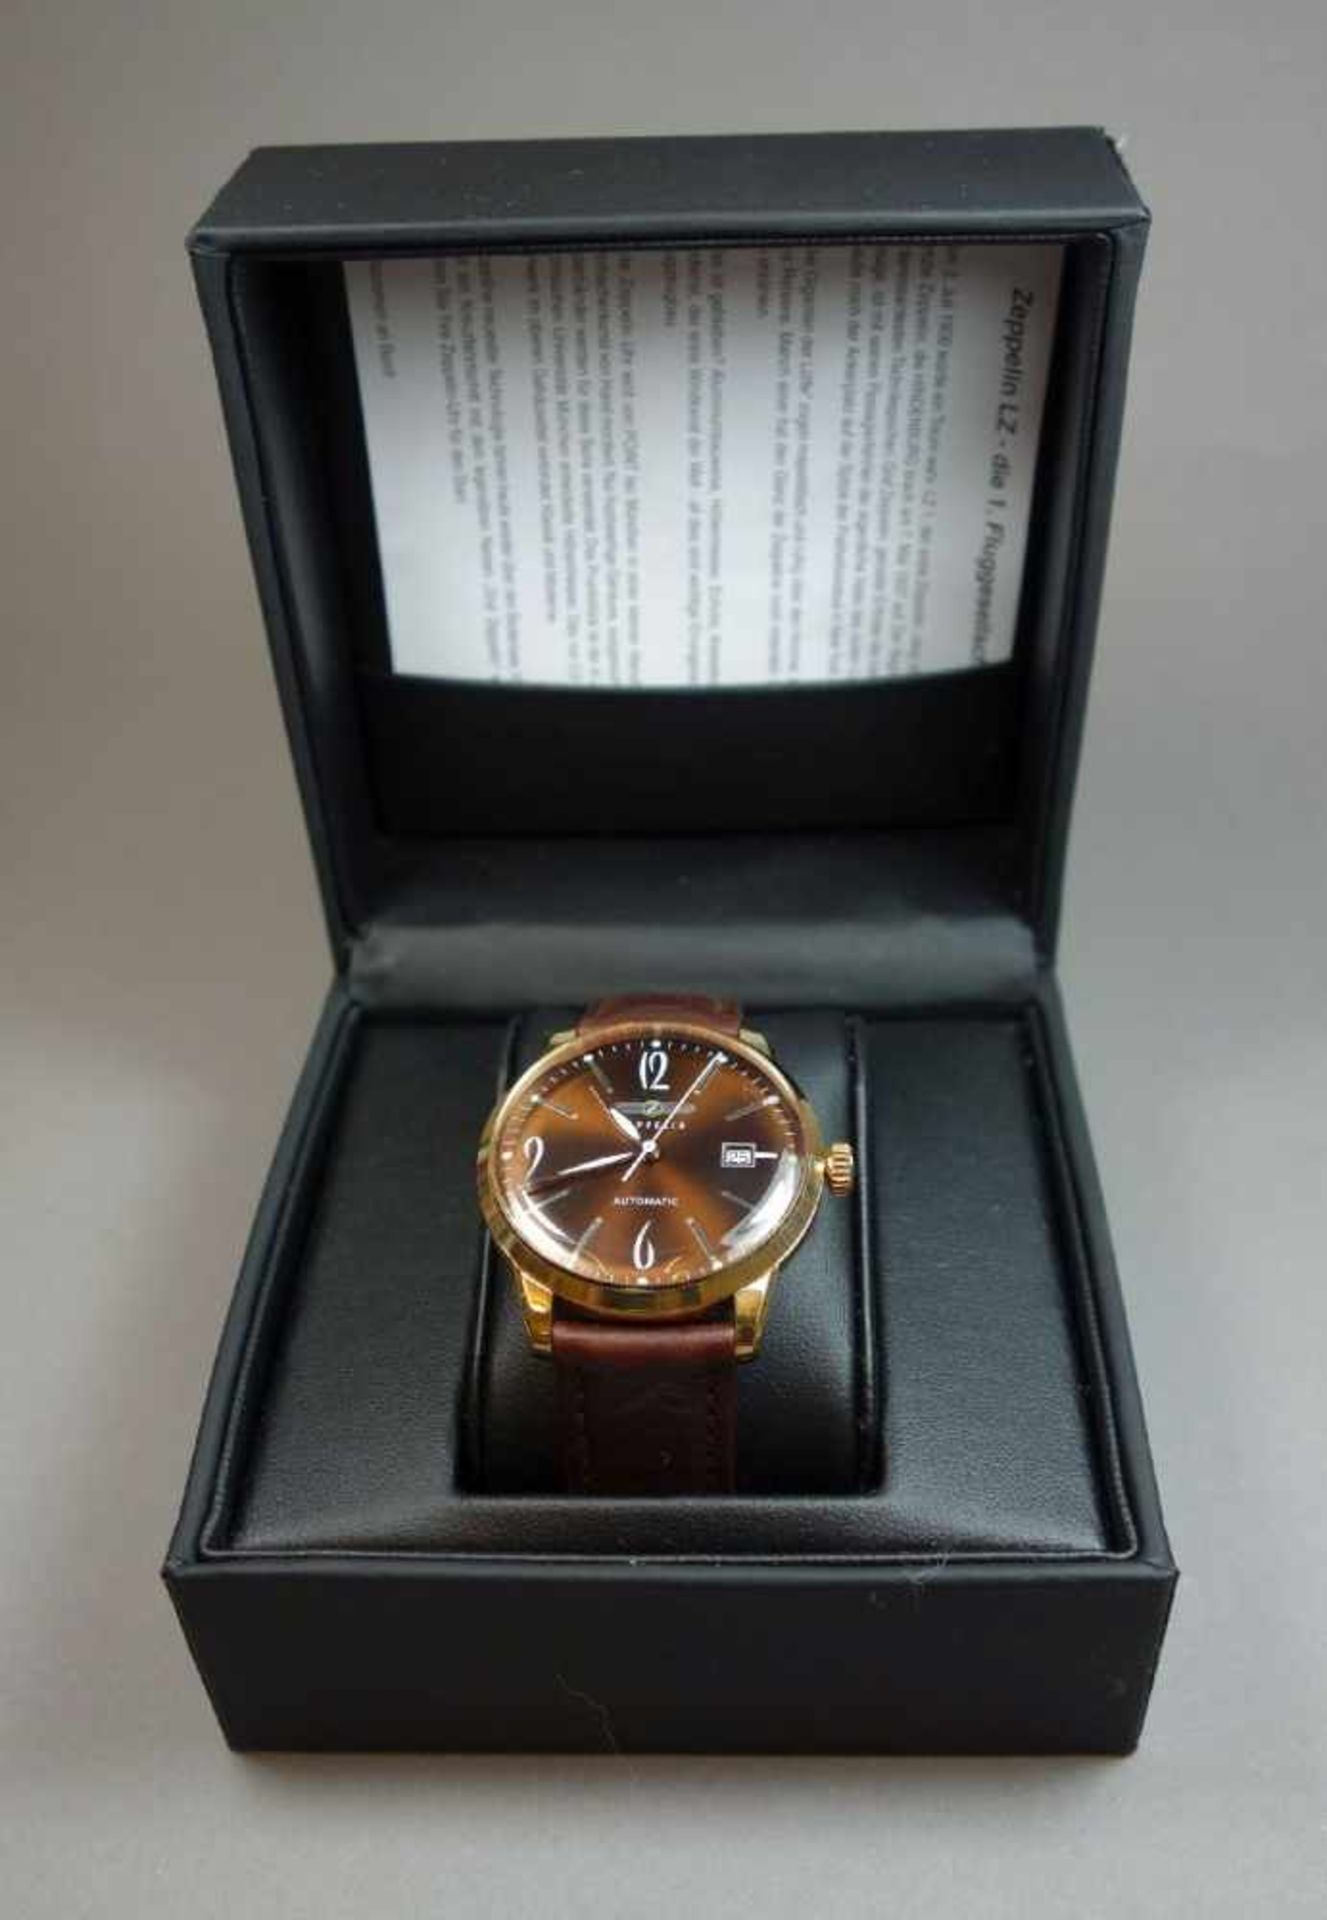 ZEPPELIN ARMBANDUHR / wristwatch, Automatik-Uhr, Manufaktur Point tec Electronic GmbH / Deutschland. - Image 5 of 7